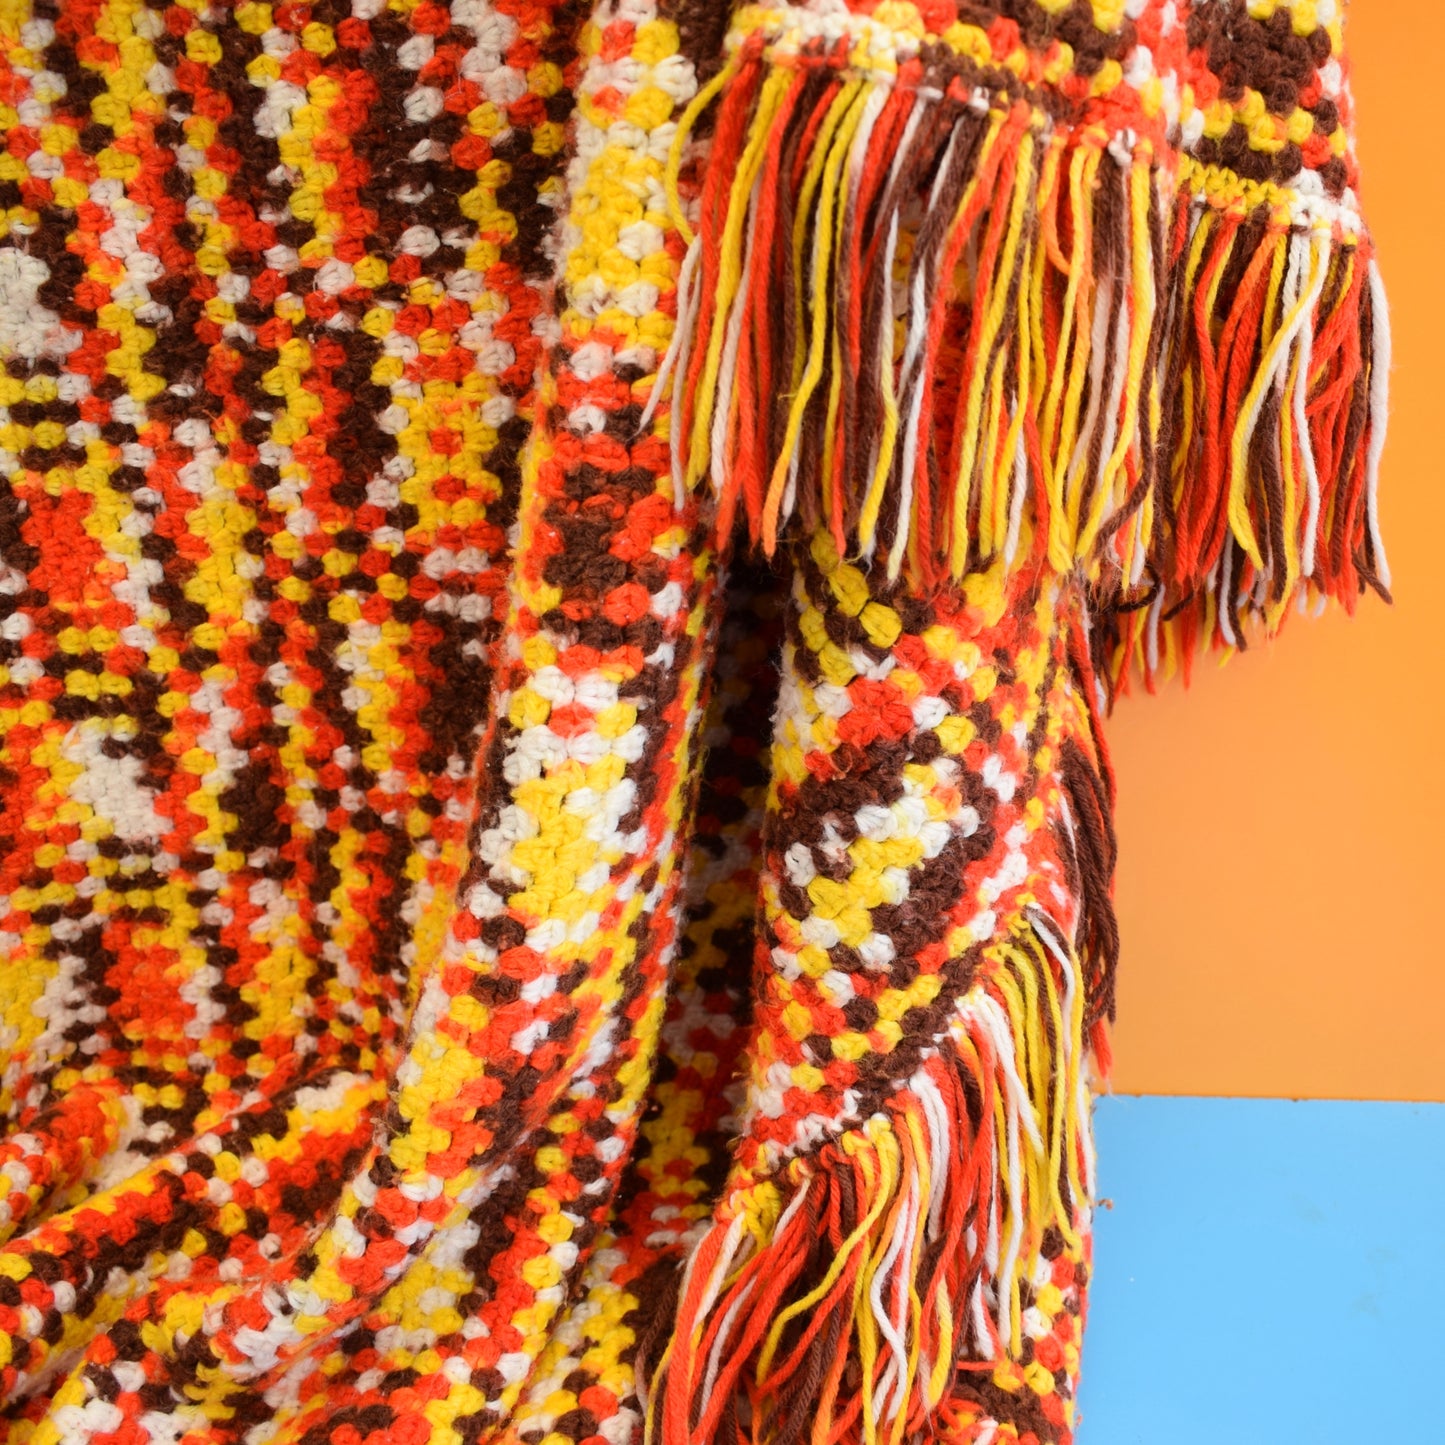 Vintage 1970s Knitted Blanket / Throw - Orange